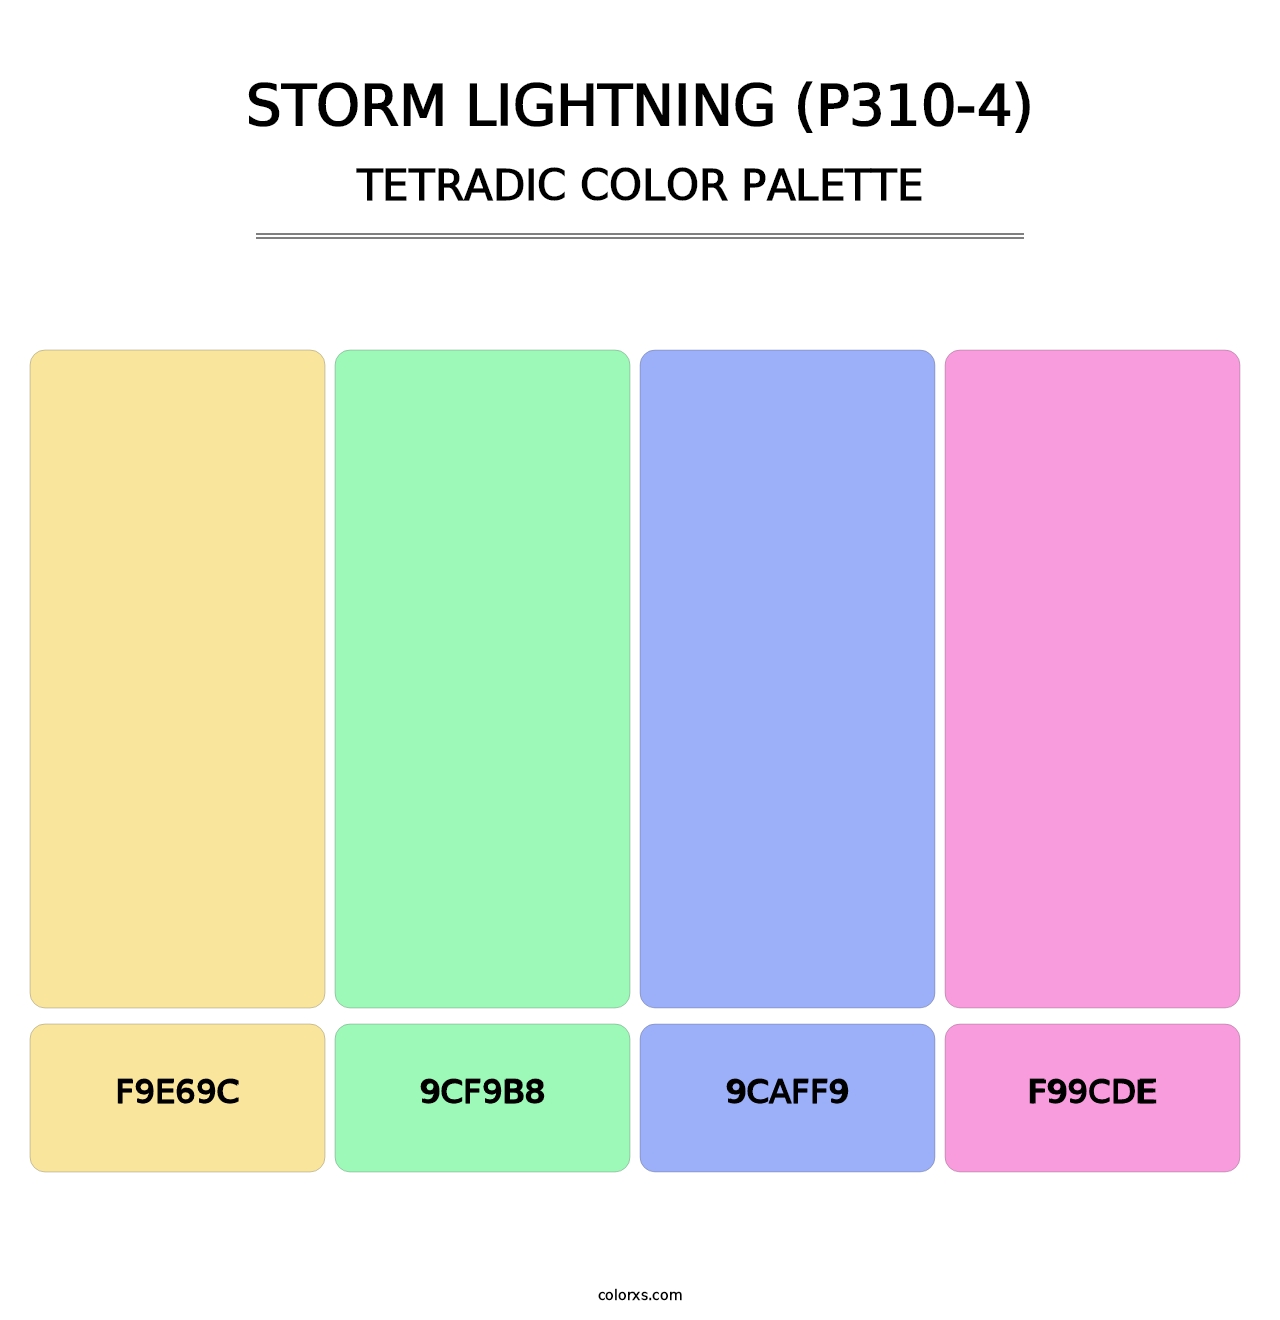 Storm Lightning (P310-4) - Tetradic Color Palette